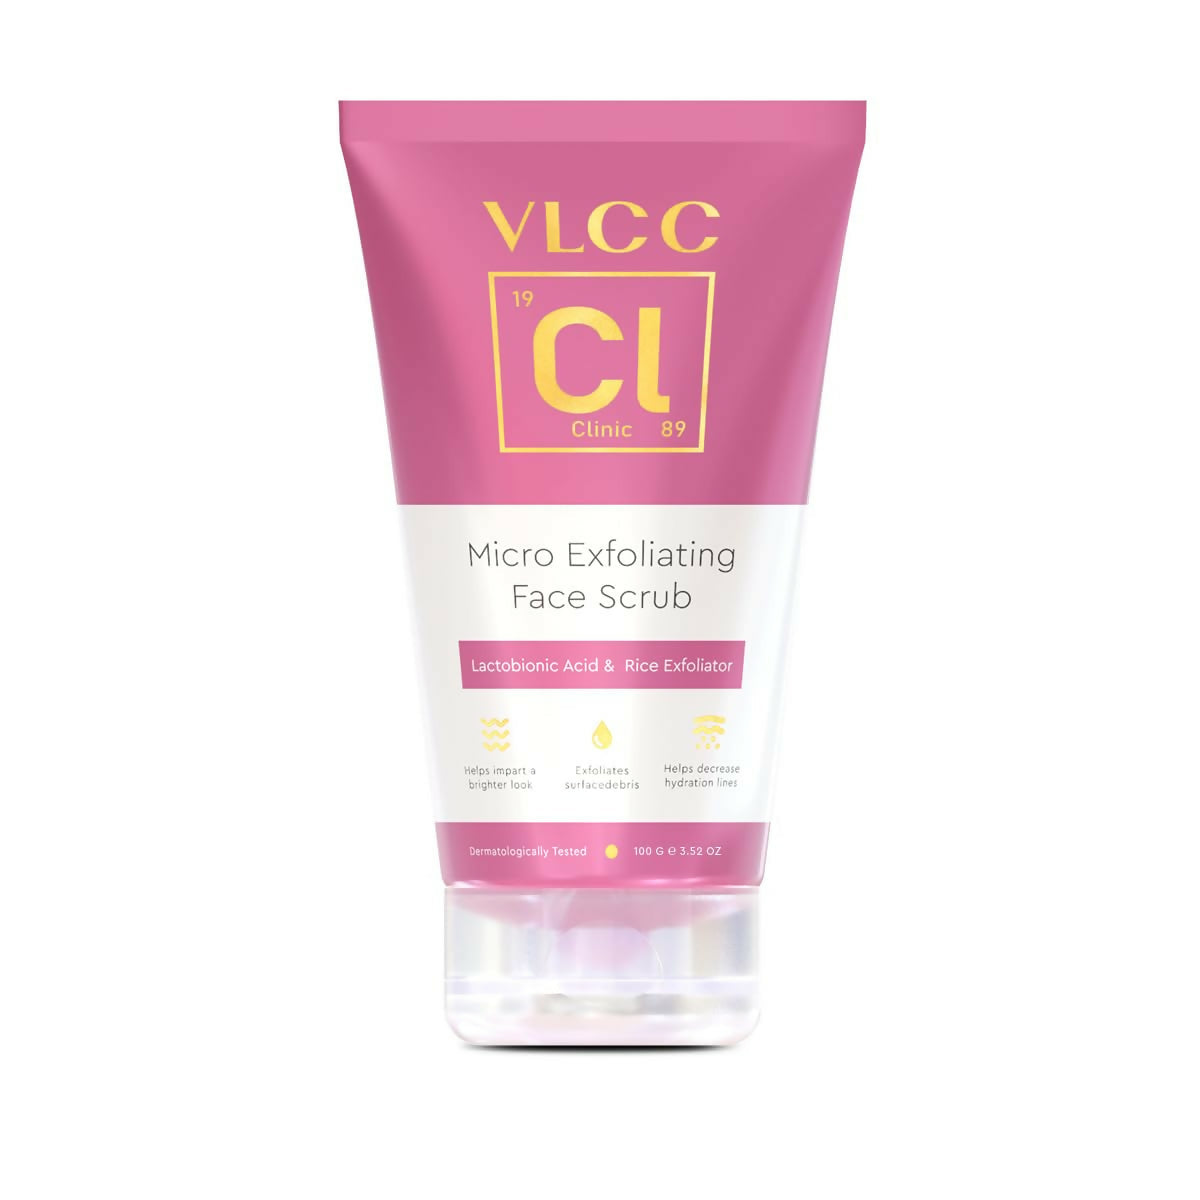 VLCC Clinic Micro Exfoliating Face Scrub